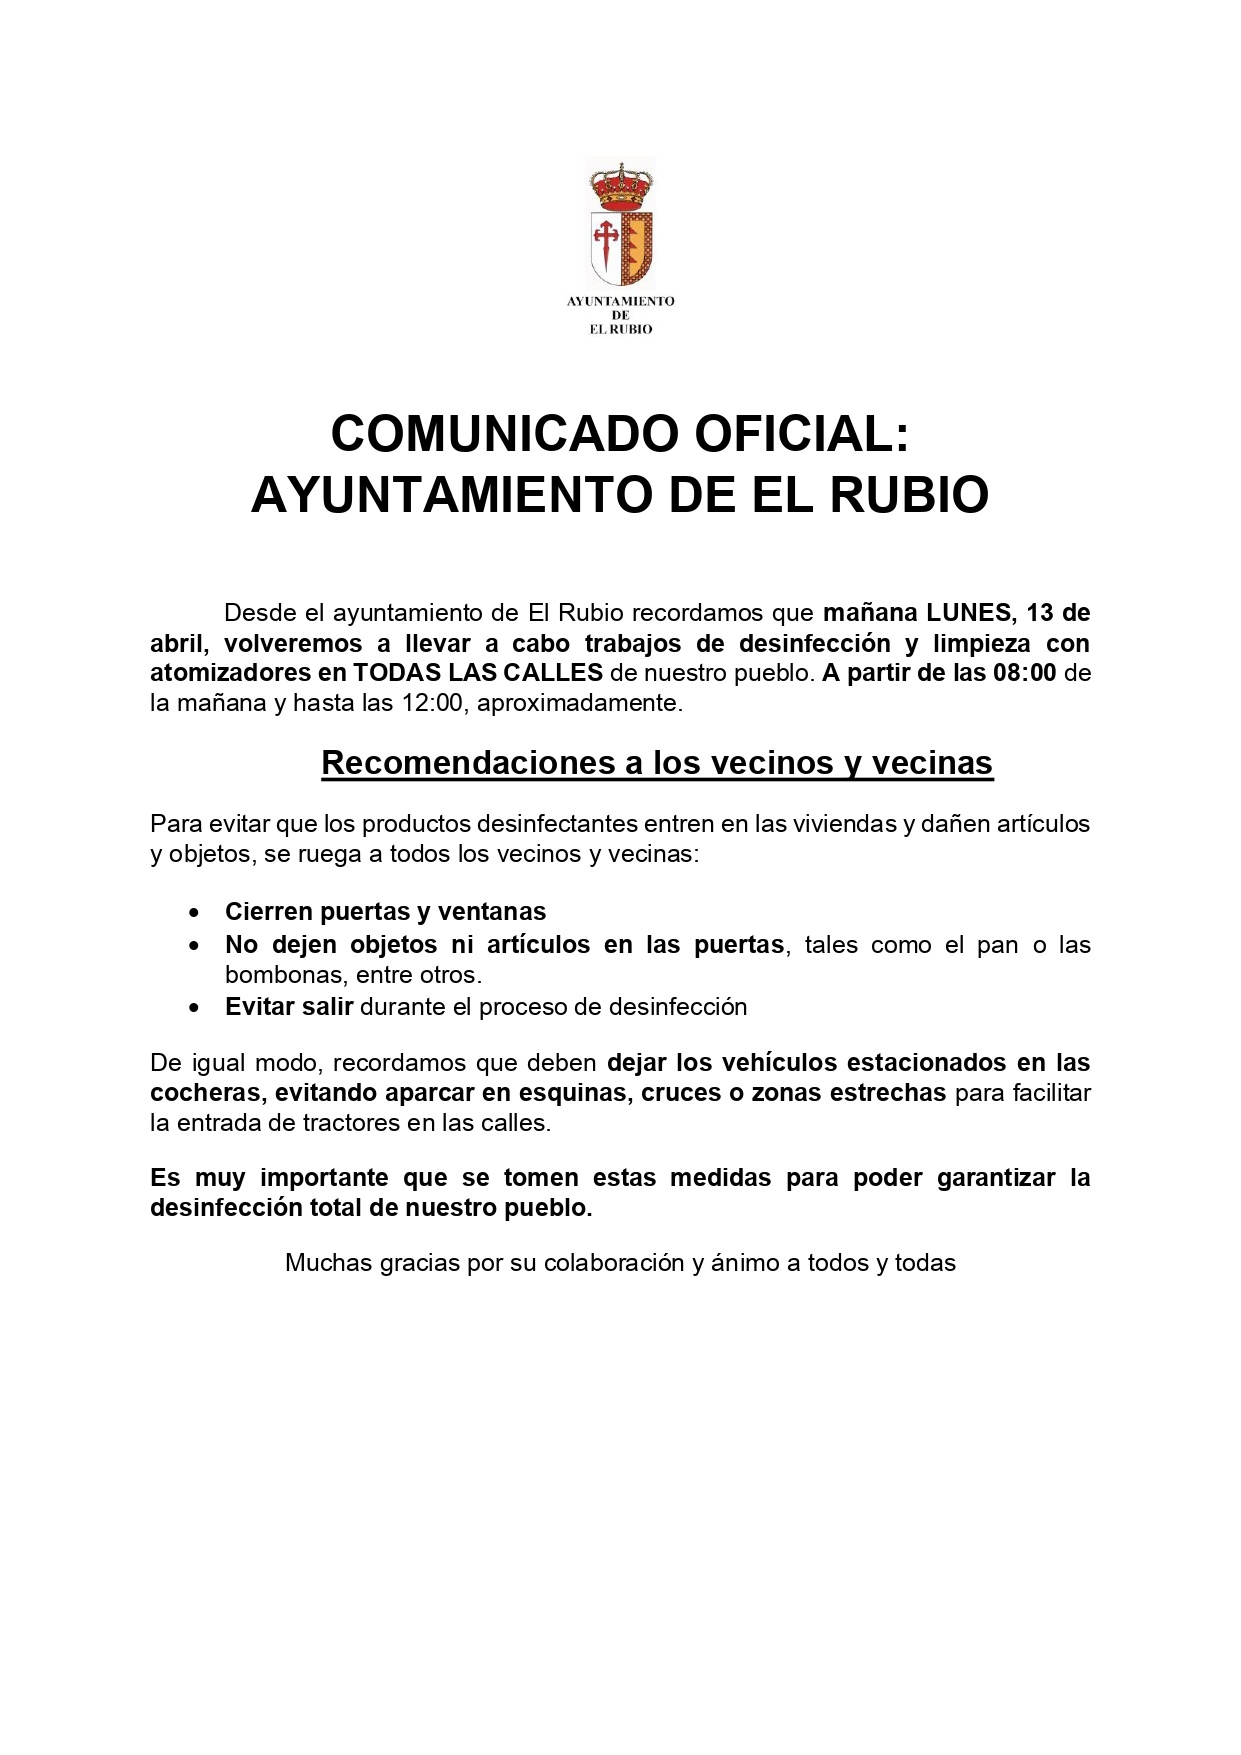 7.-COMUNICADO OFICIAL AYTO RUBIO 12-04-20_page-0001